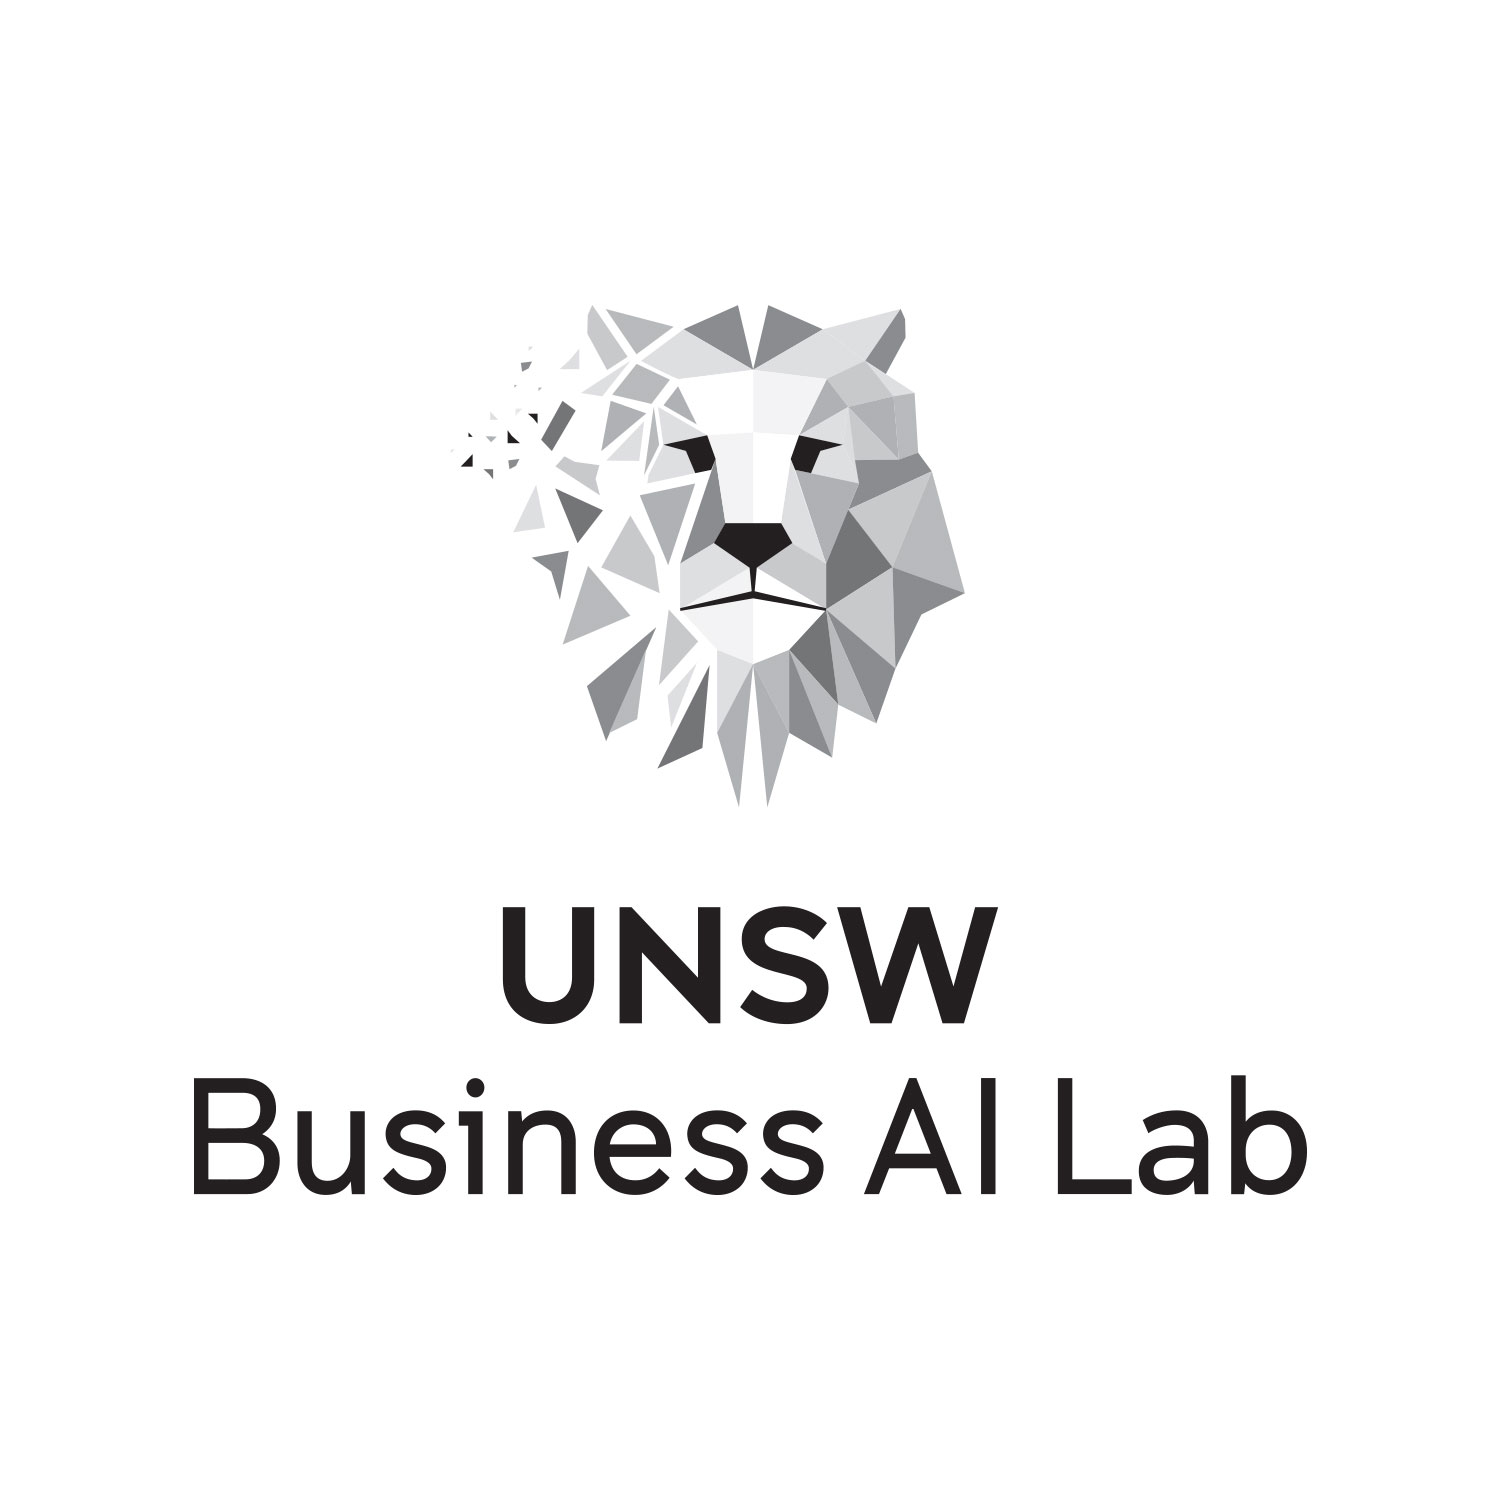 UNSW Business AI Lab